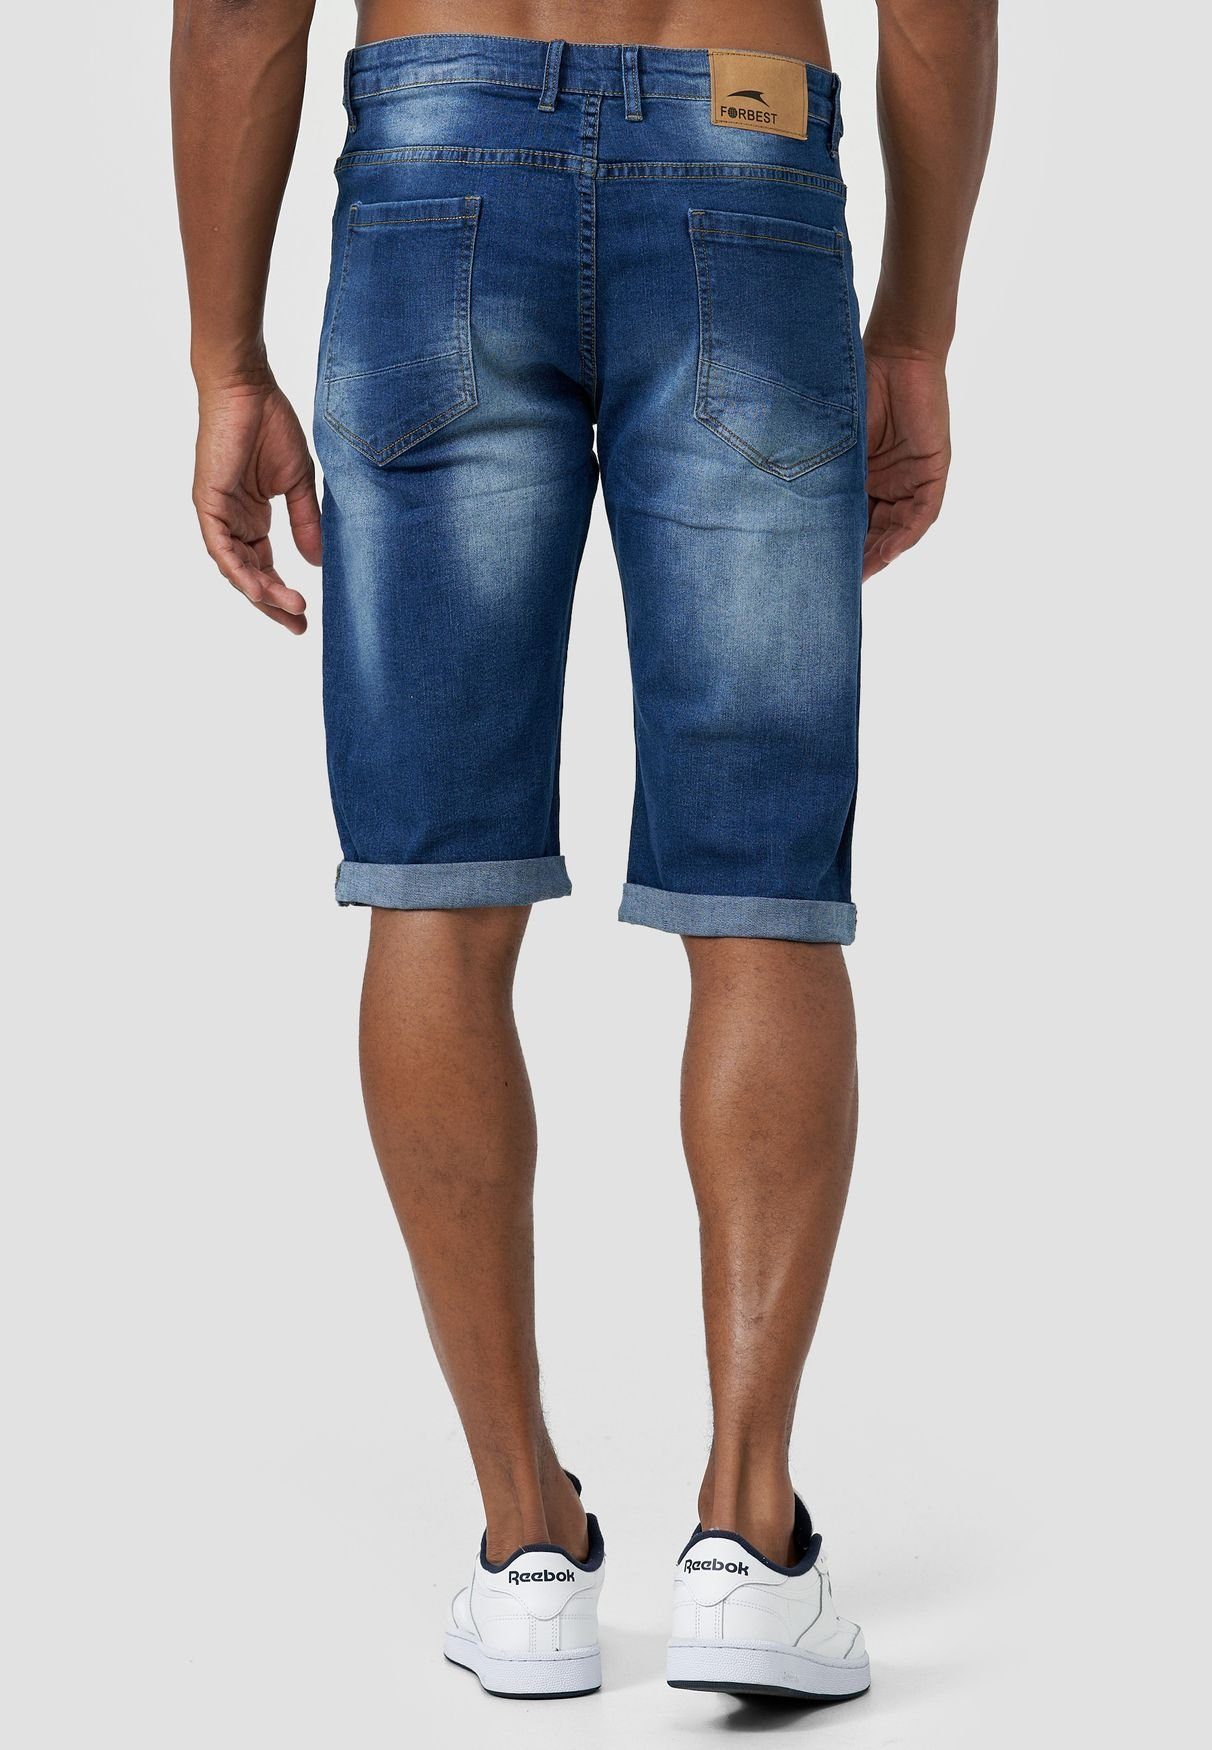 Herren Jeans Shorts Bermuda Capri Baumwolle Waschung Sommer Kurze Hose Vintage 